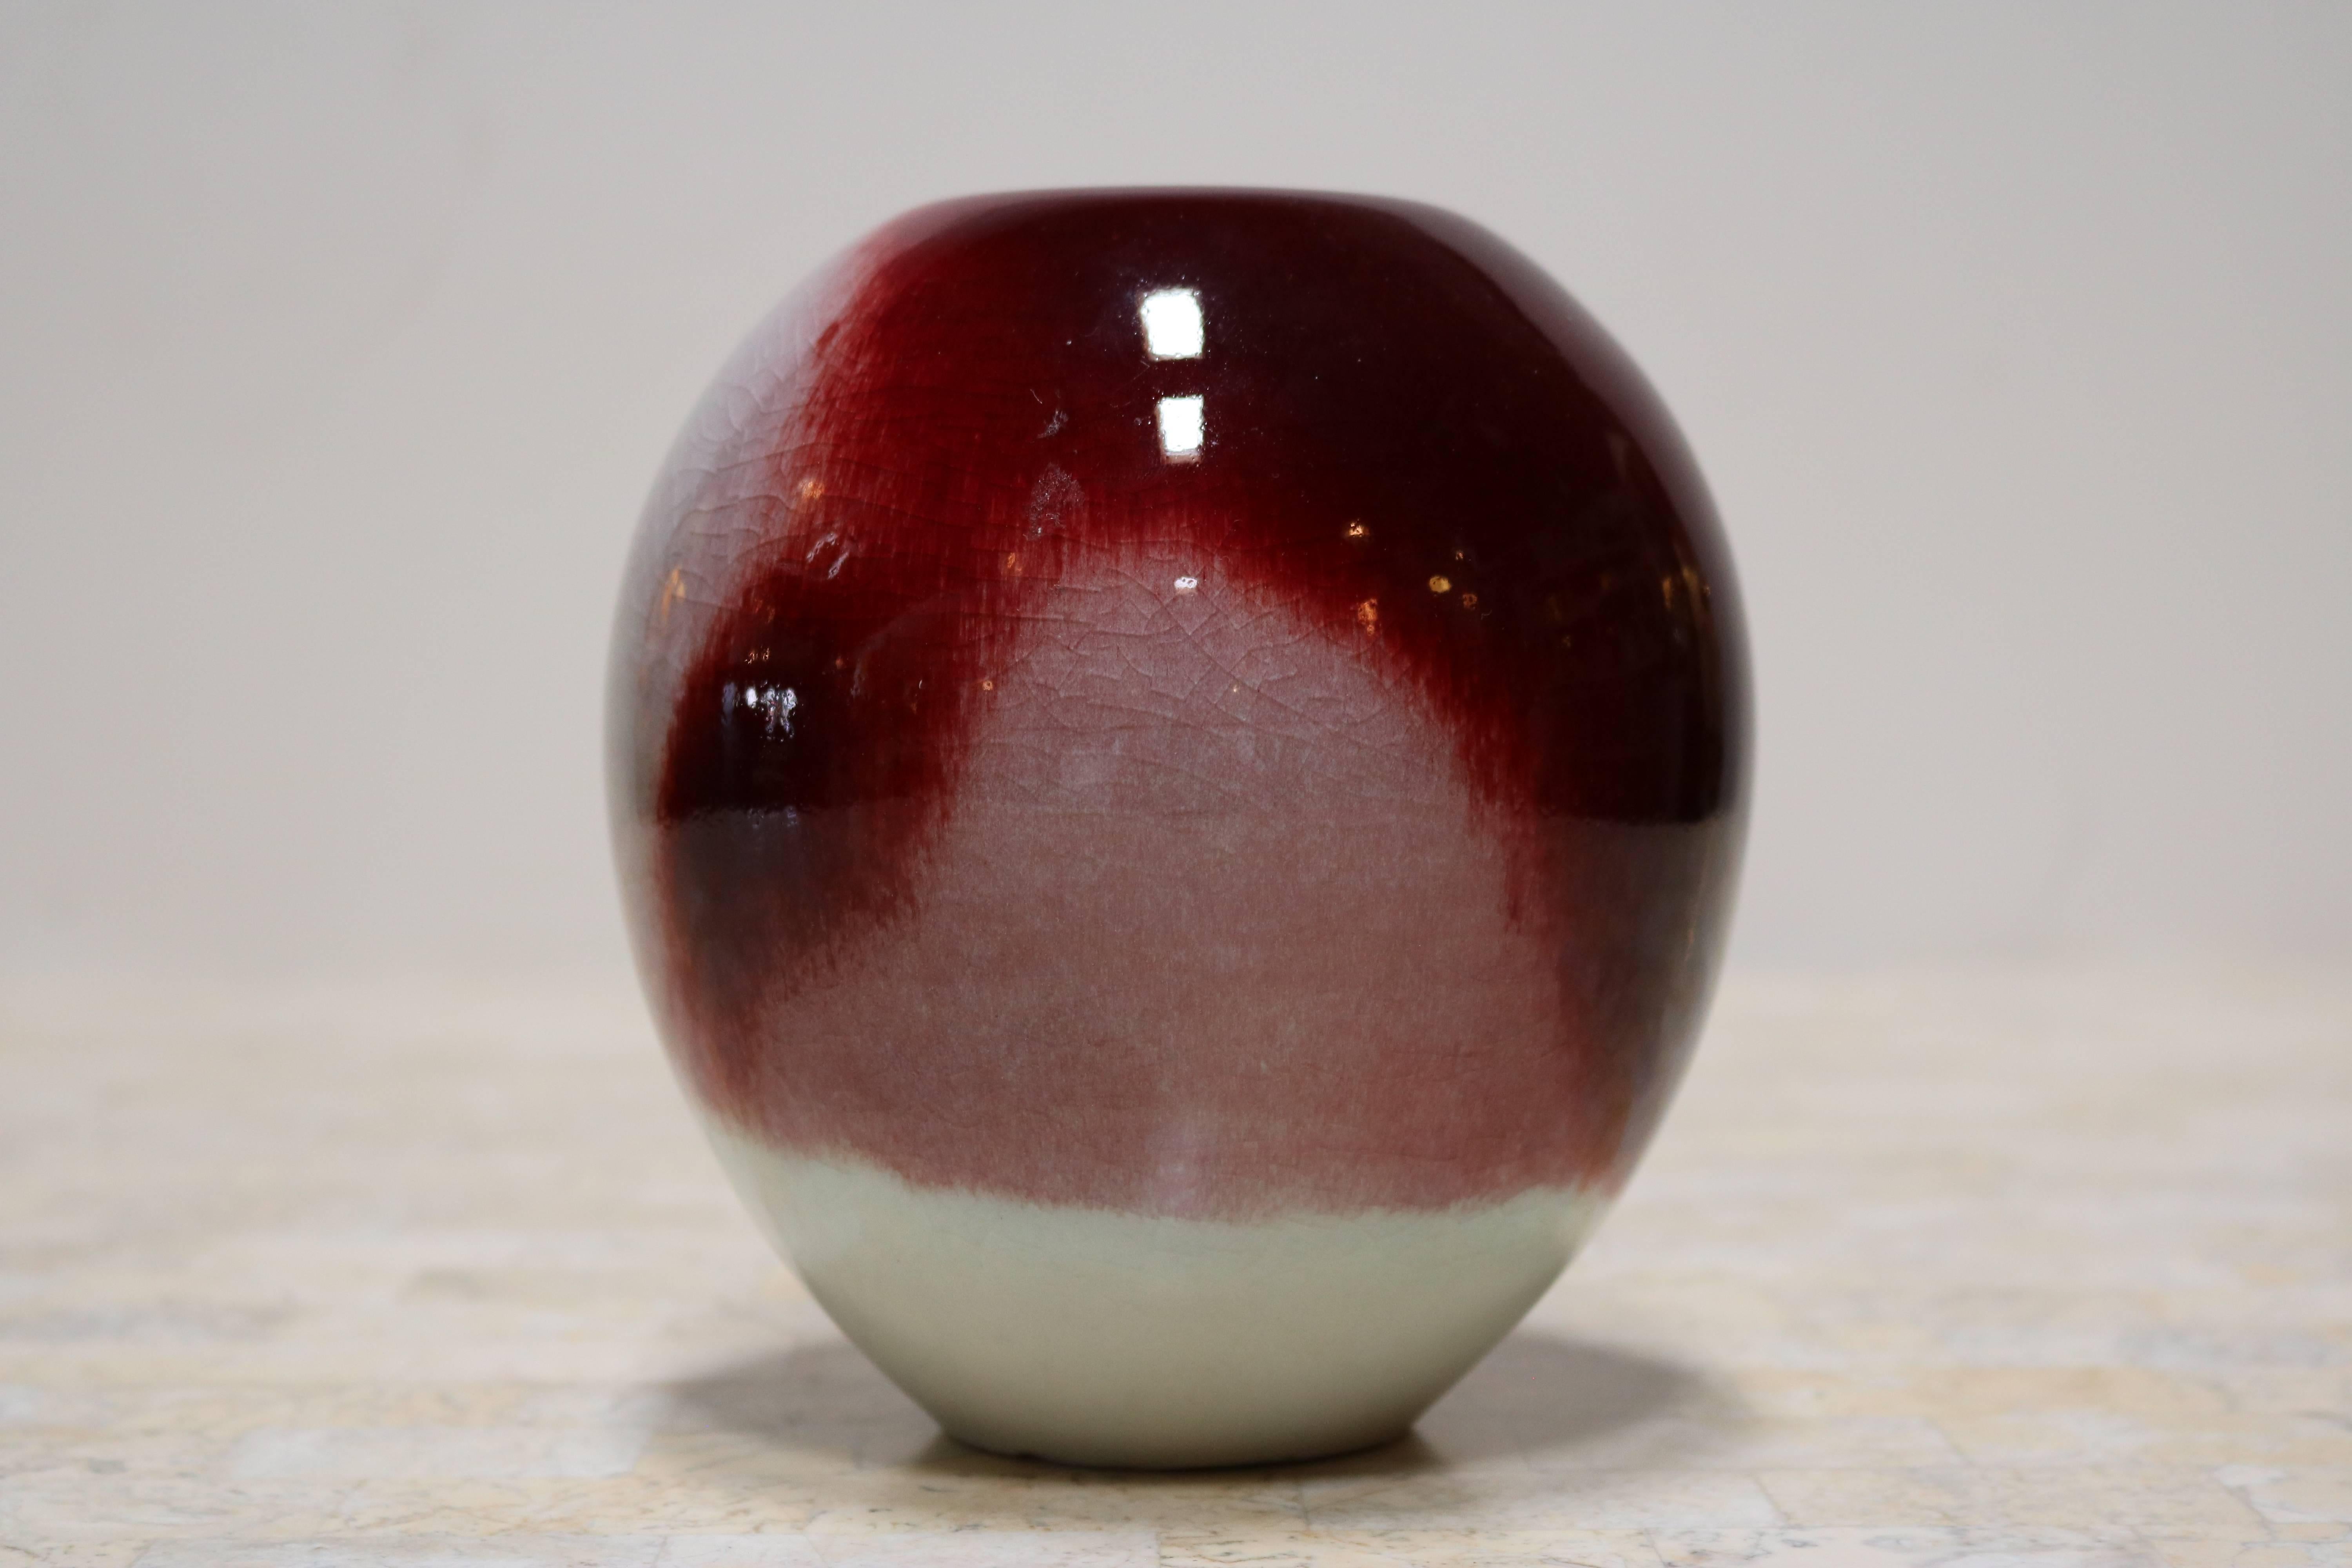 Japanese Candy Apple Red and Cream Decorative Ceramic by Masuo Ojima